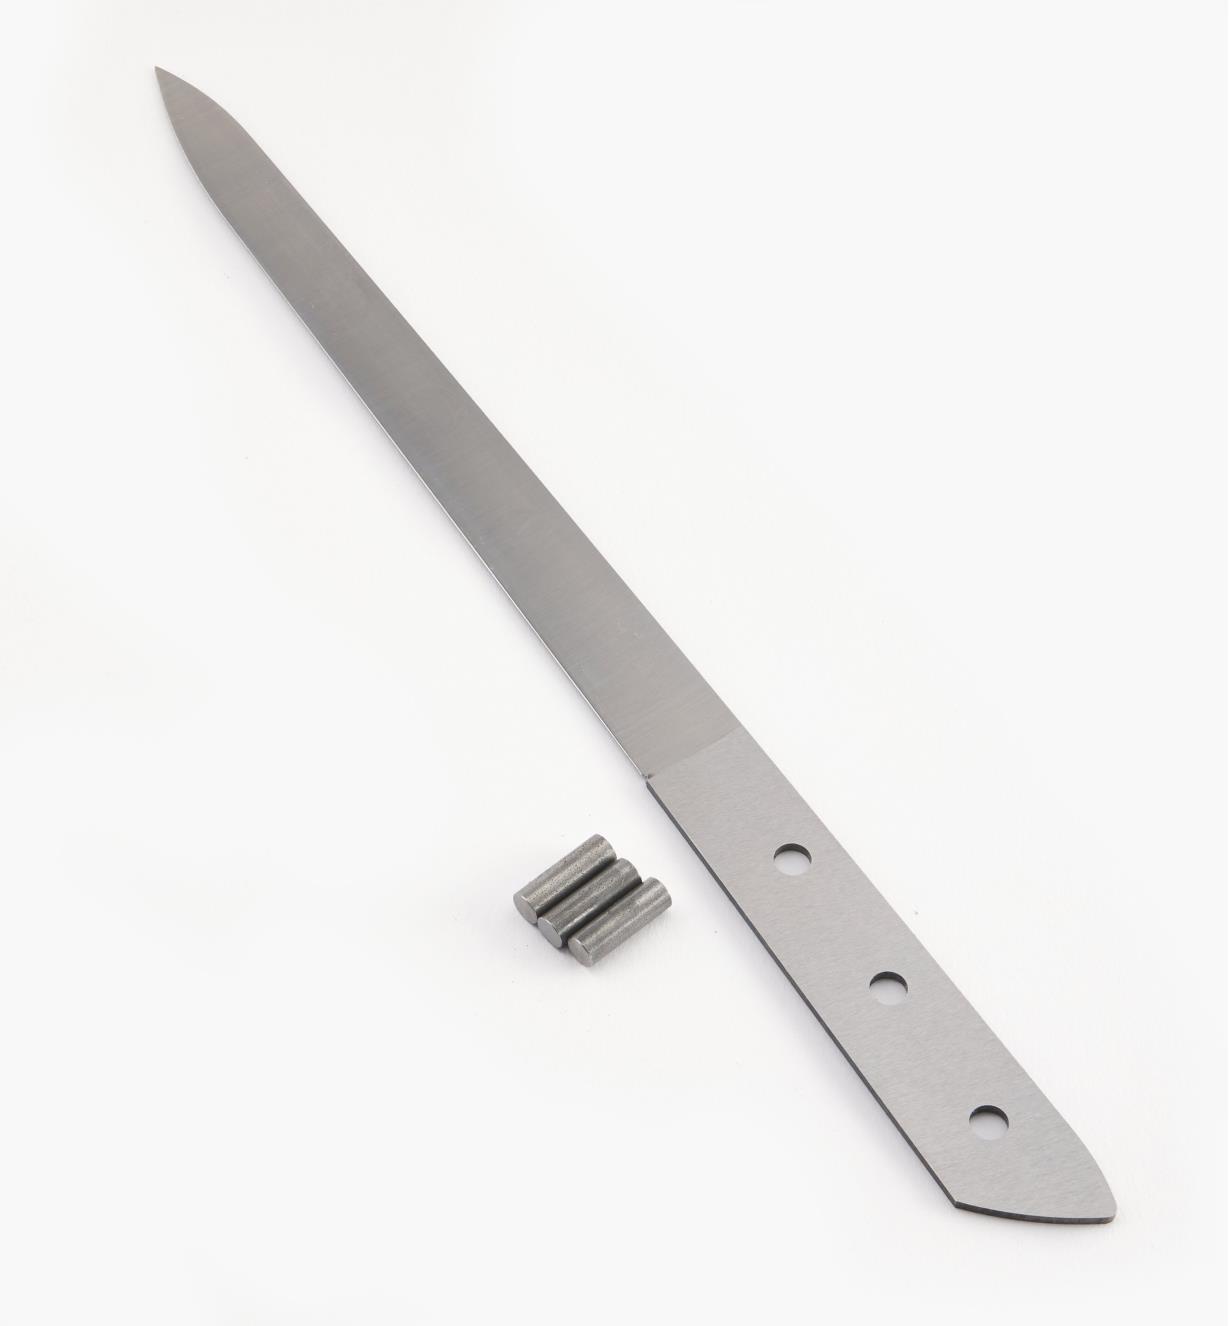 19P2456 - 3/32" × 8" Slicing Knife Kit